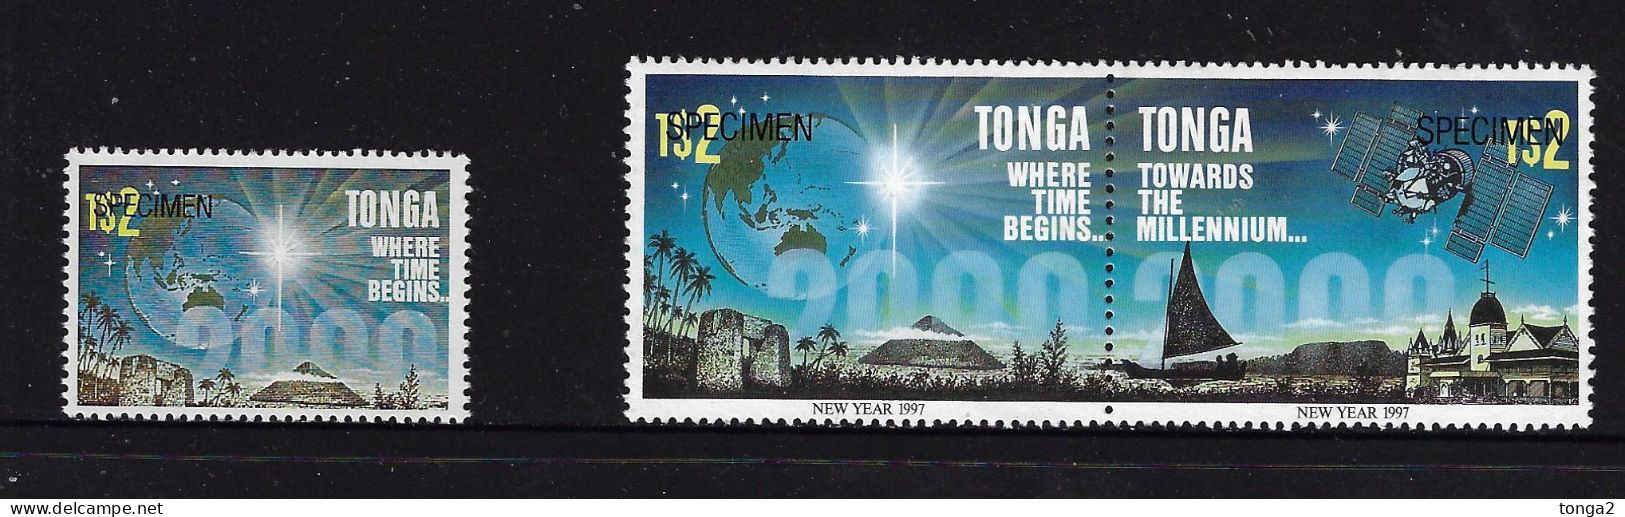 Tonga 1996 ESSAY $2.00 Space - Time - Important Read Description For More Details - Océanie